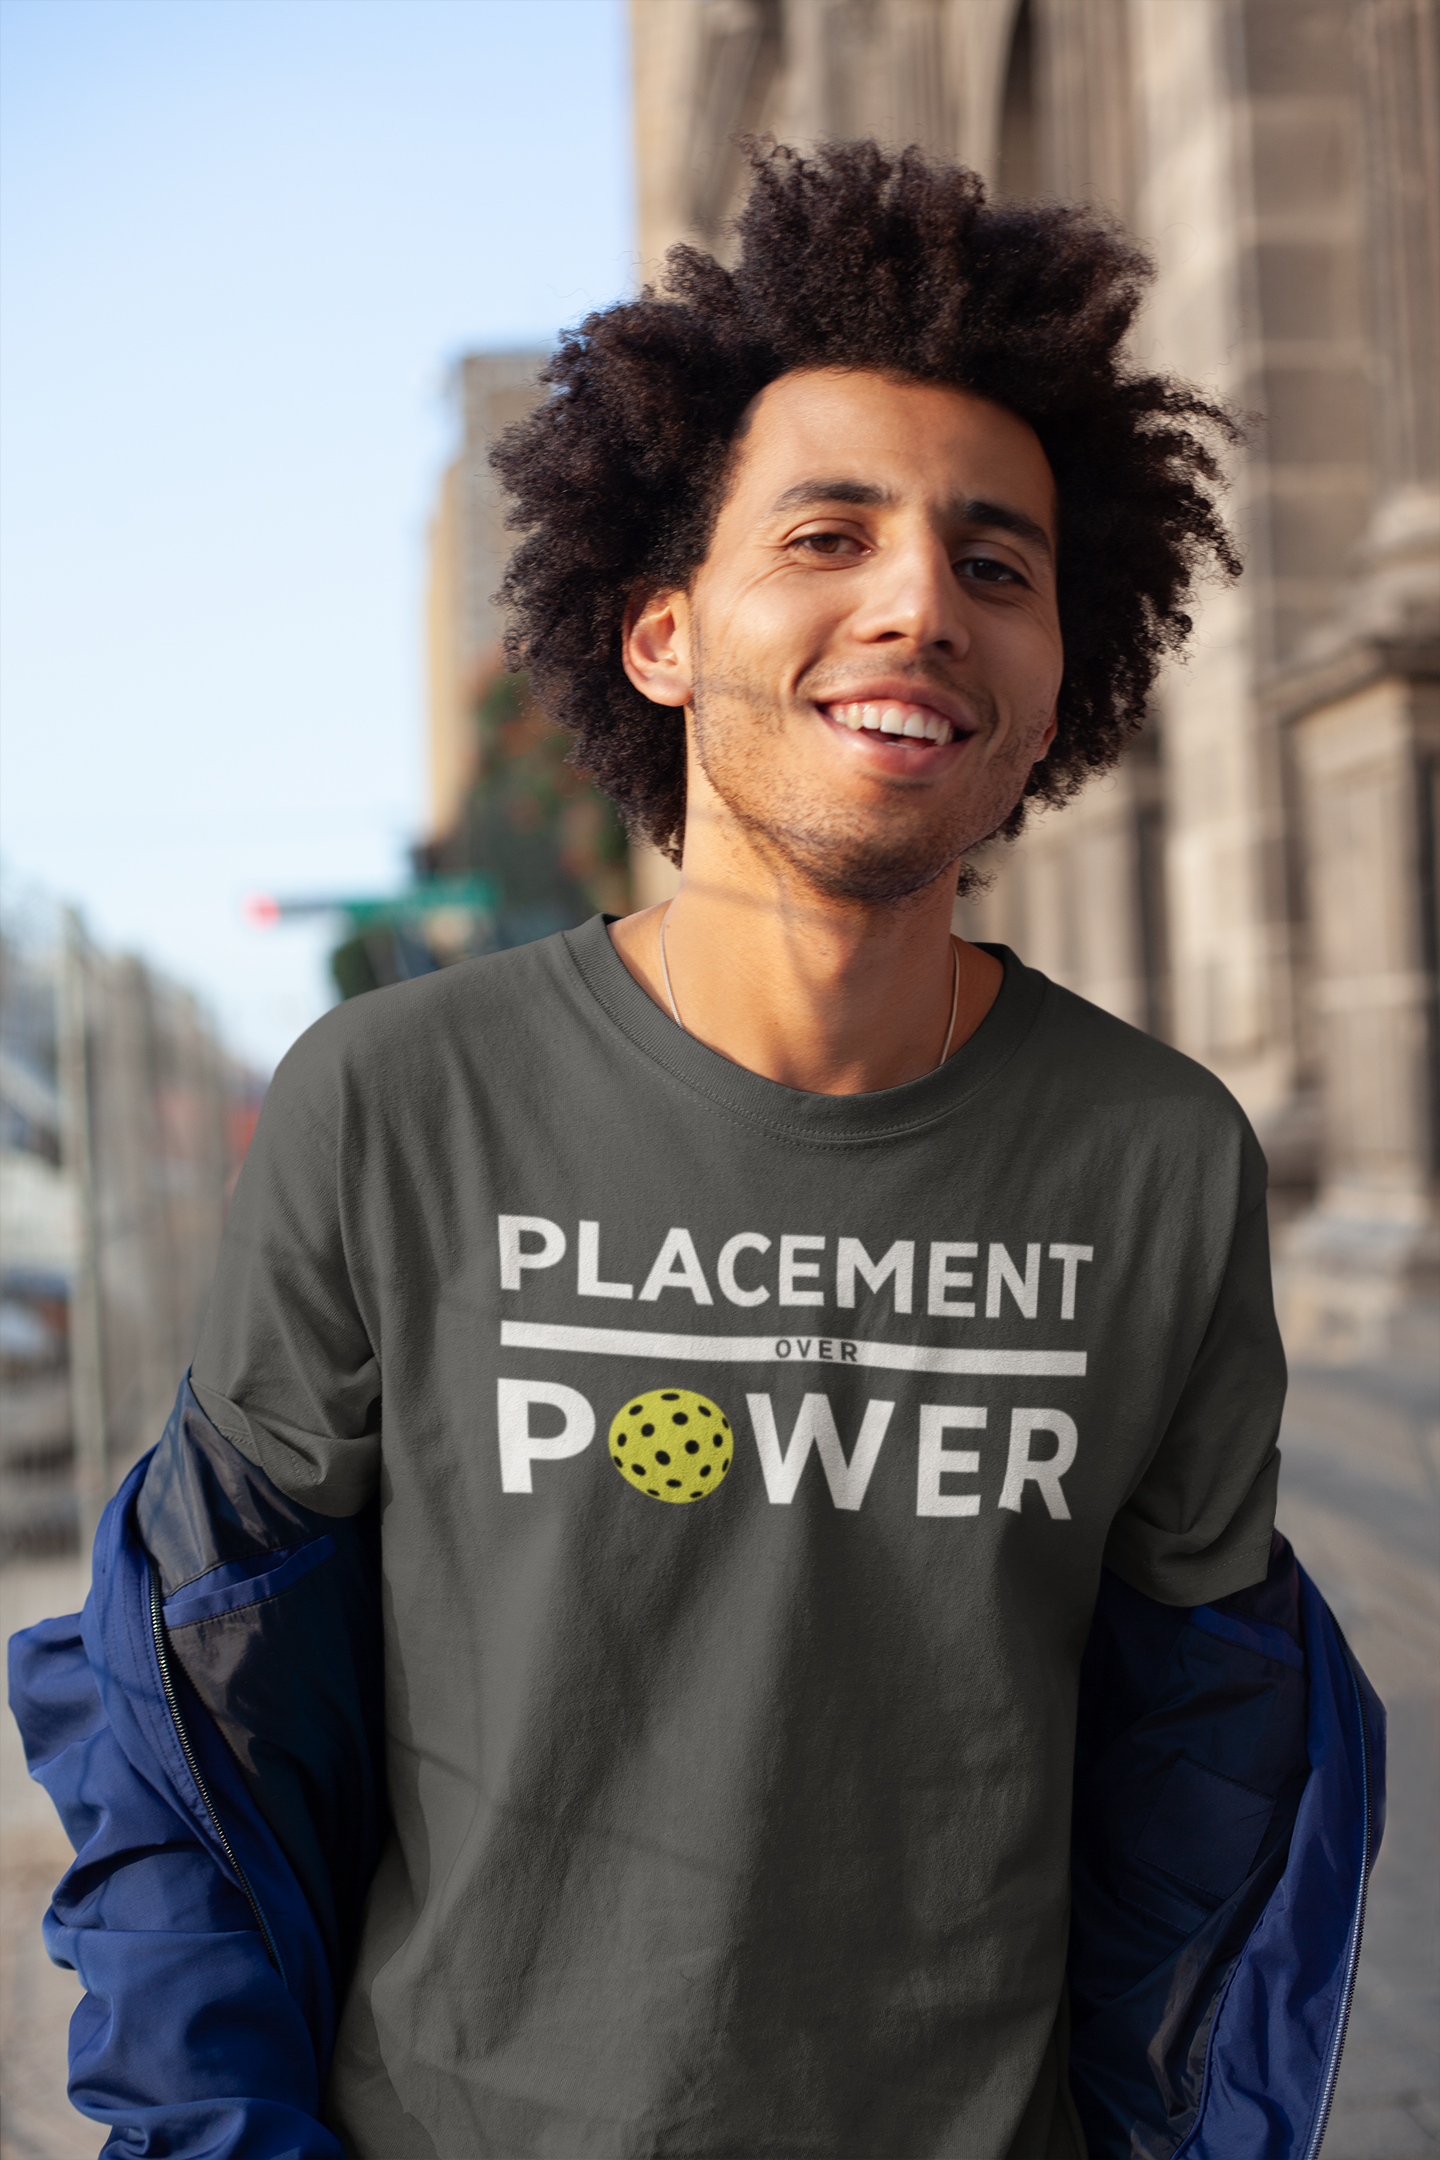 PLACEMENT OVER POWER - Pickleball Shirt